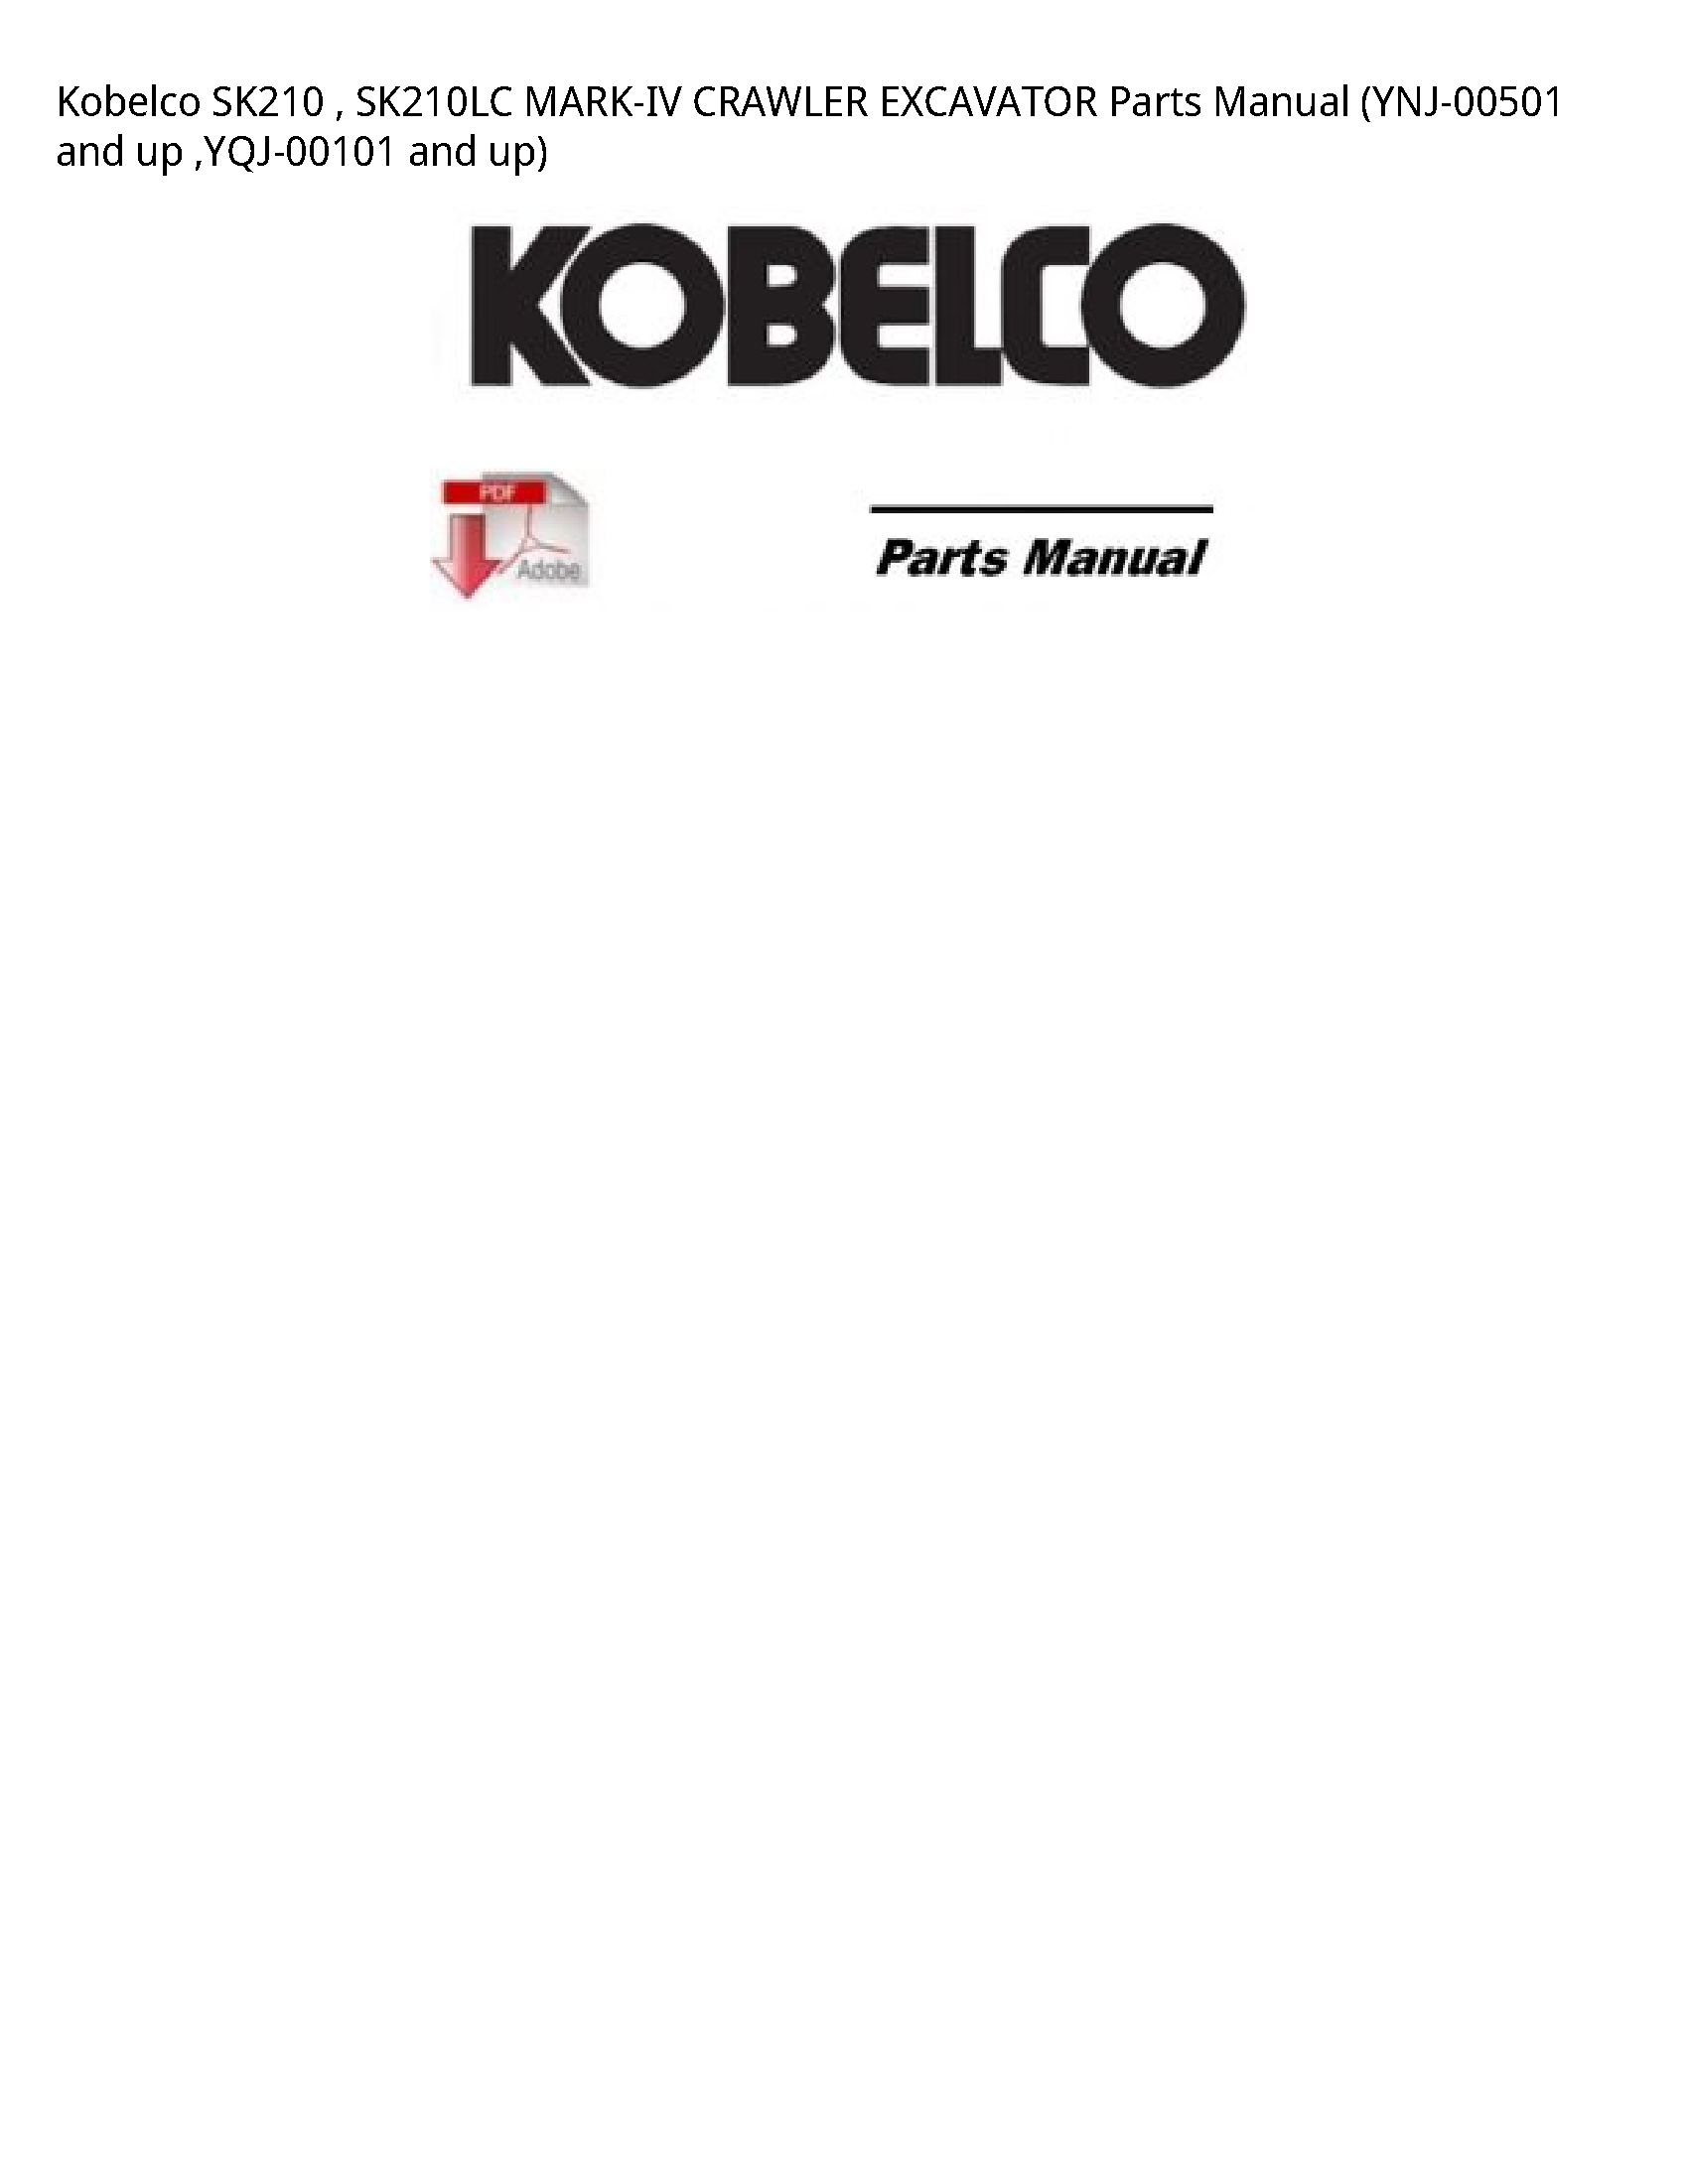 Kobelco SK210 MARK-IV CRAWLER EXCAVATOR Parts manual